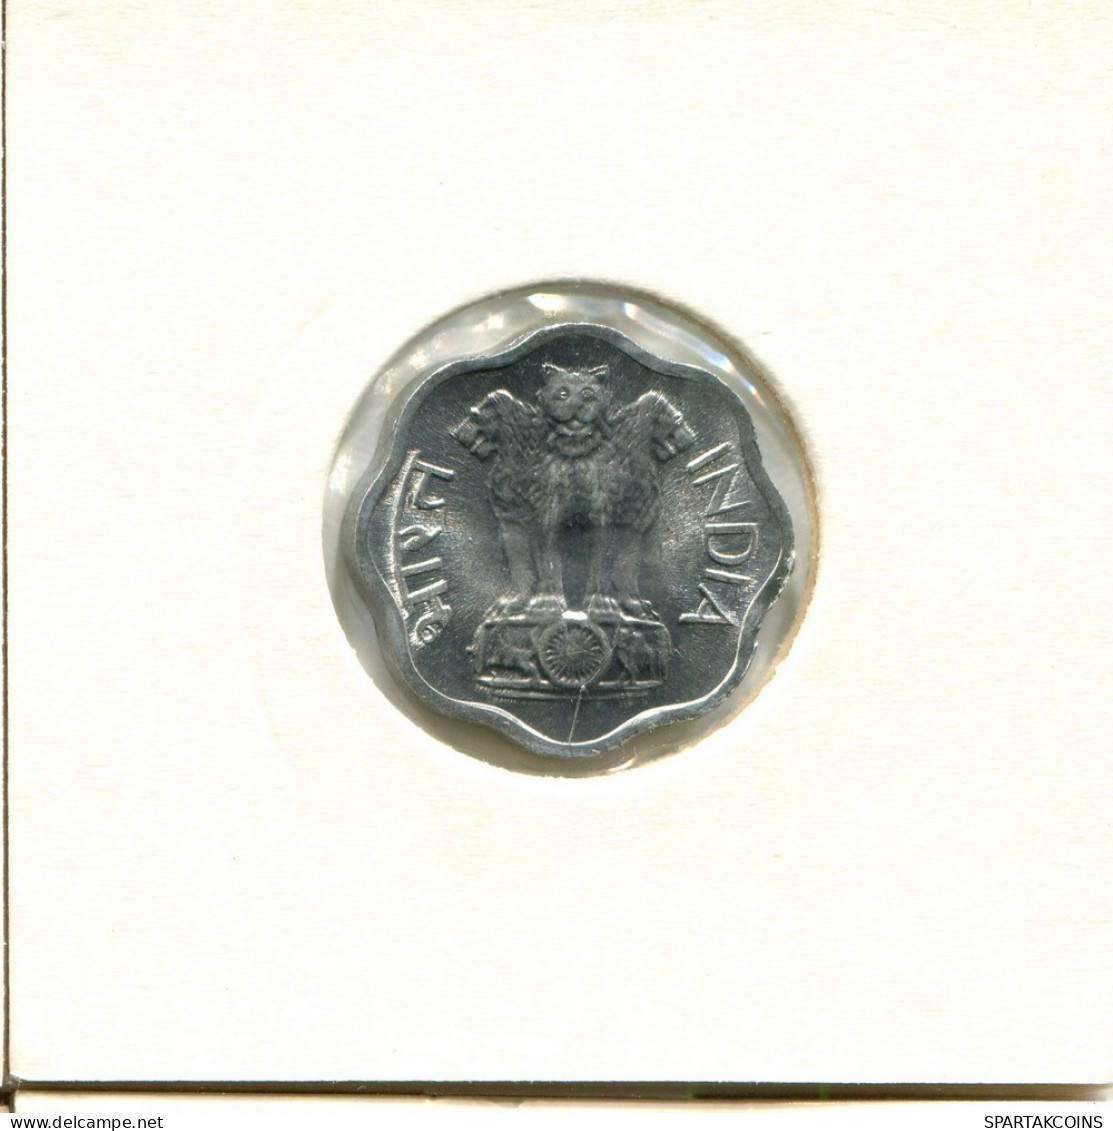 2 PAISE 1977 INDIA Coin #AY721.U.A - India